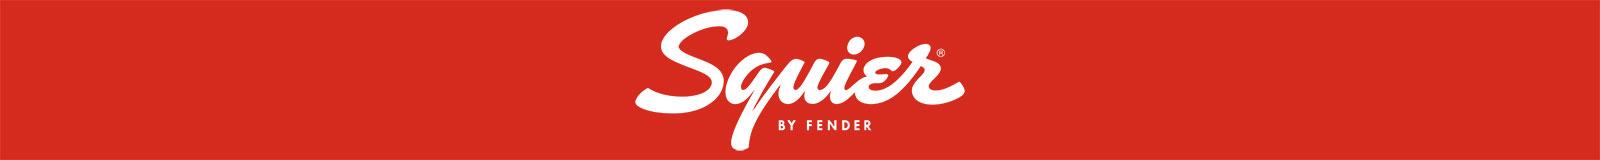 Squier White Logo Red Background